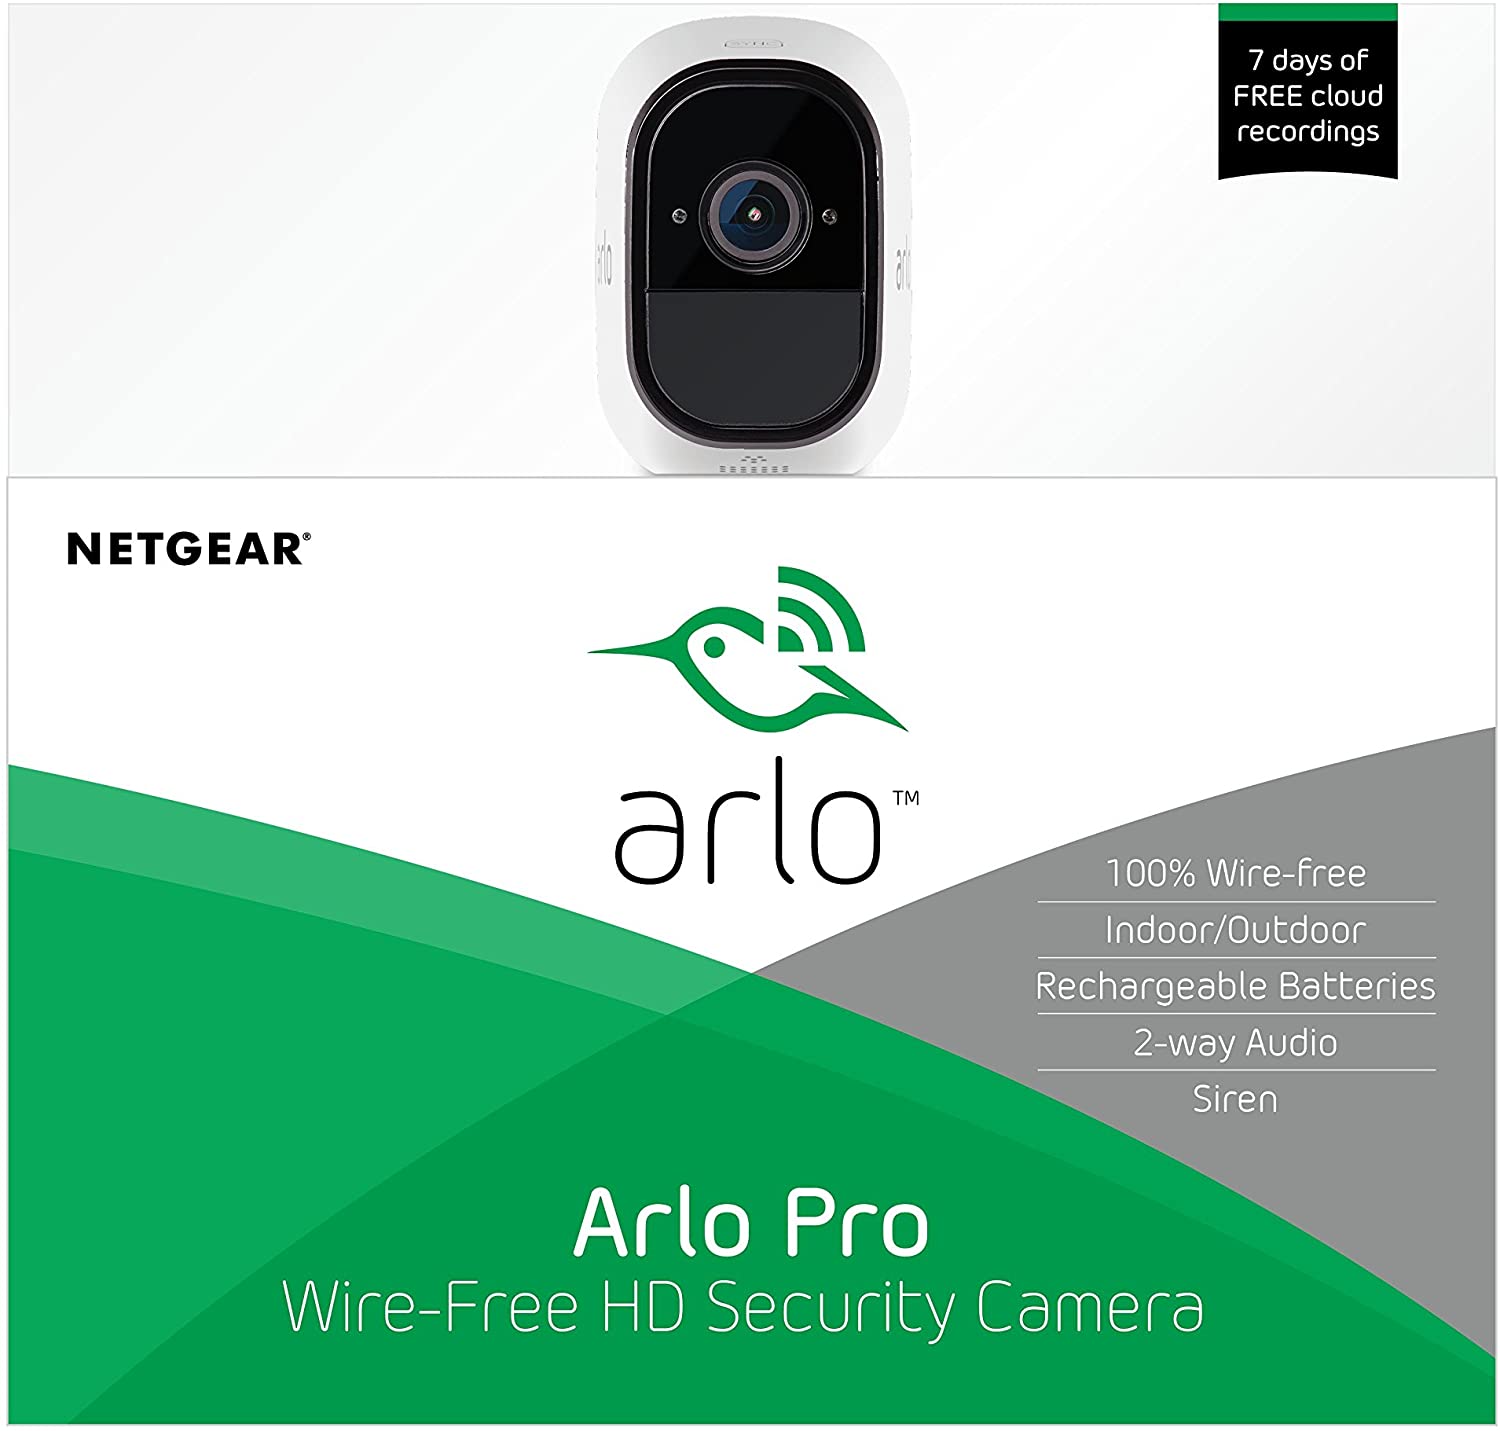 Arlo Pro Wire-Free HD Home Security Add-on Camera VMC4030 Intro